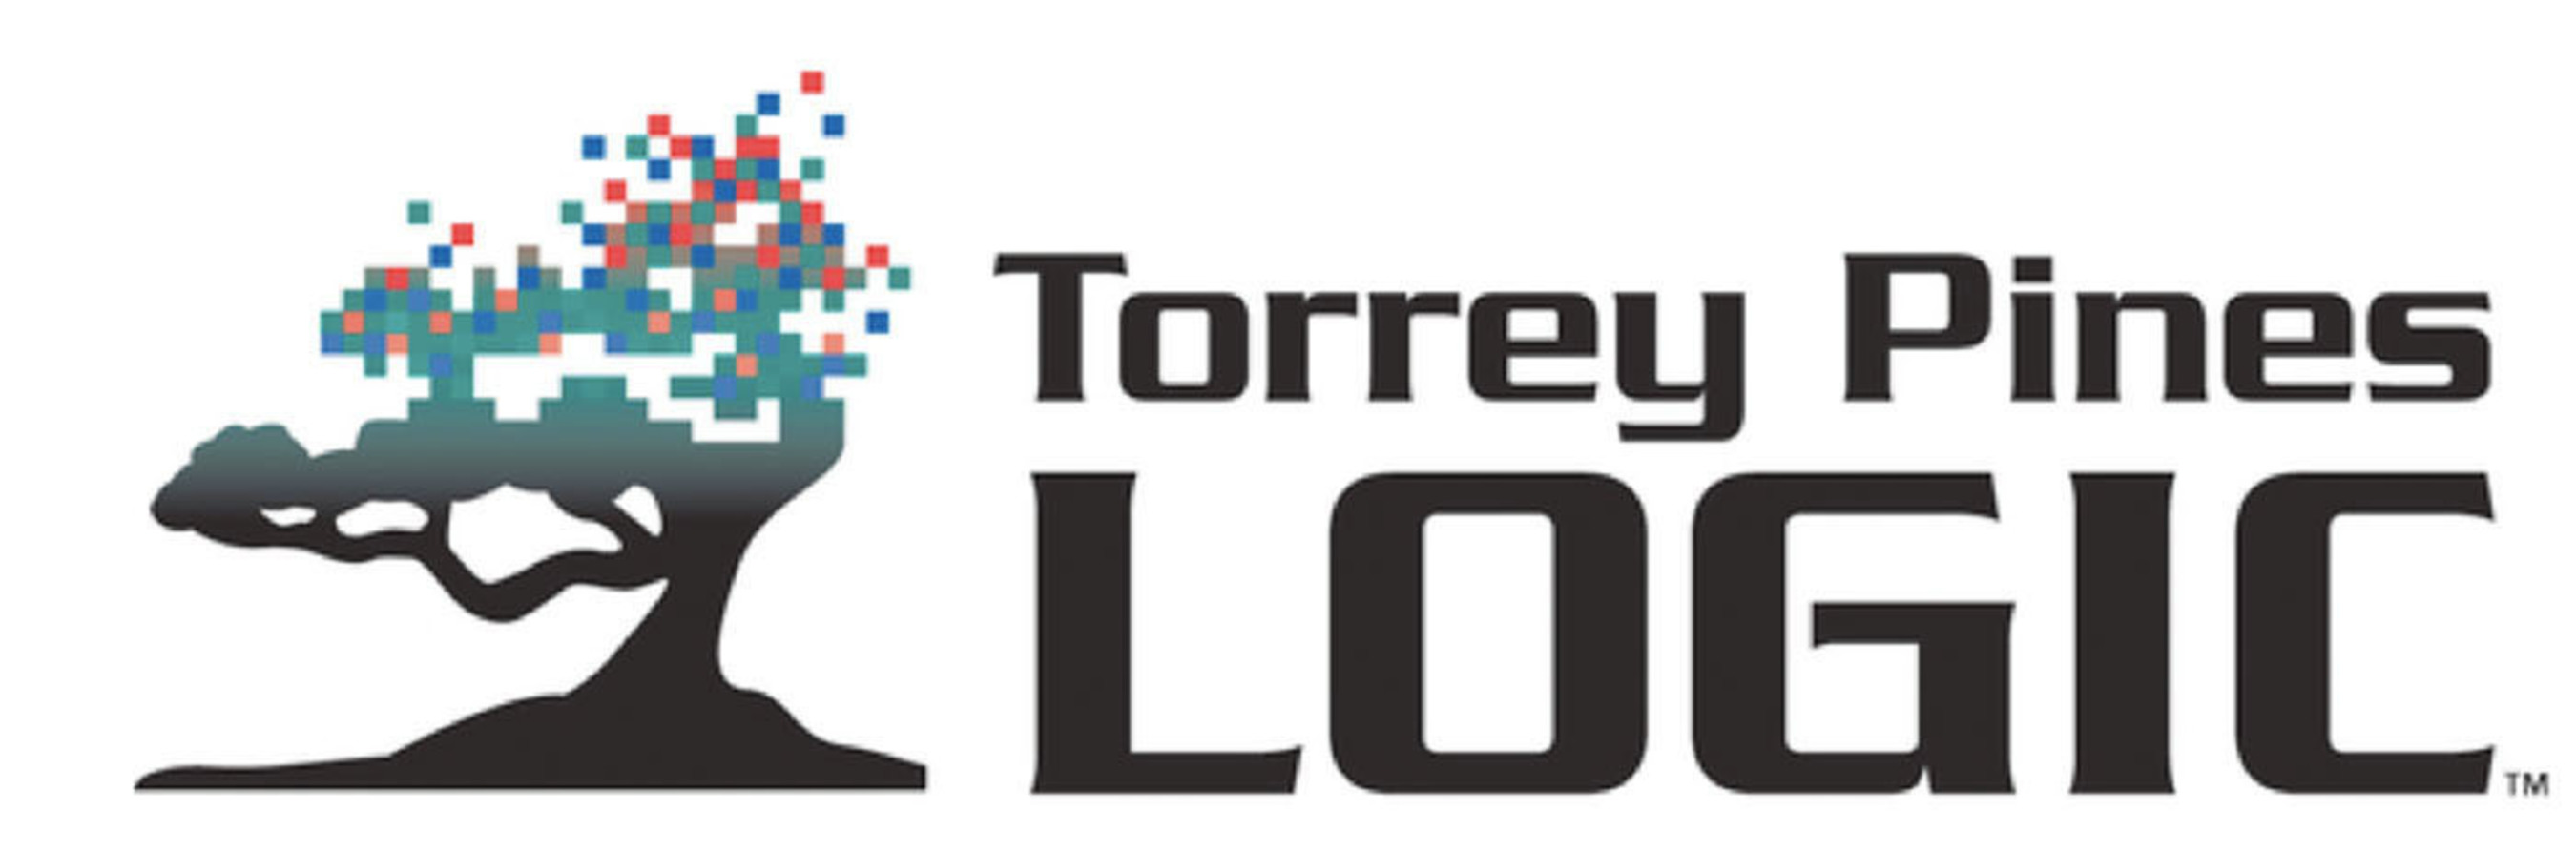 Torrey Pines Logic, Inc. Logo. (PRNewsFoto/Torrey Pines Logic, Inc.) (PRNewsFoto/)